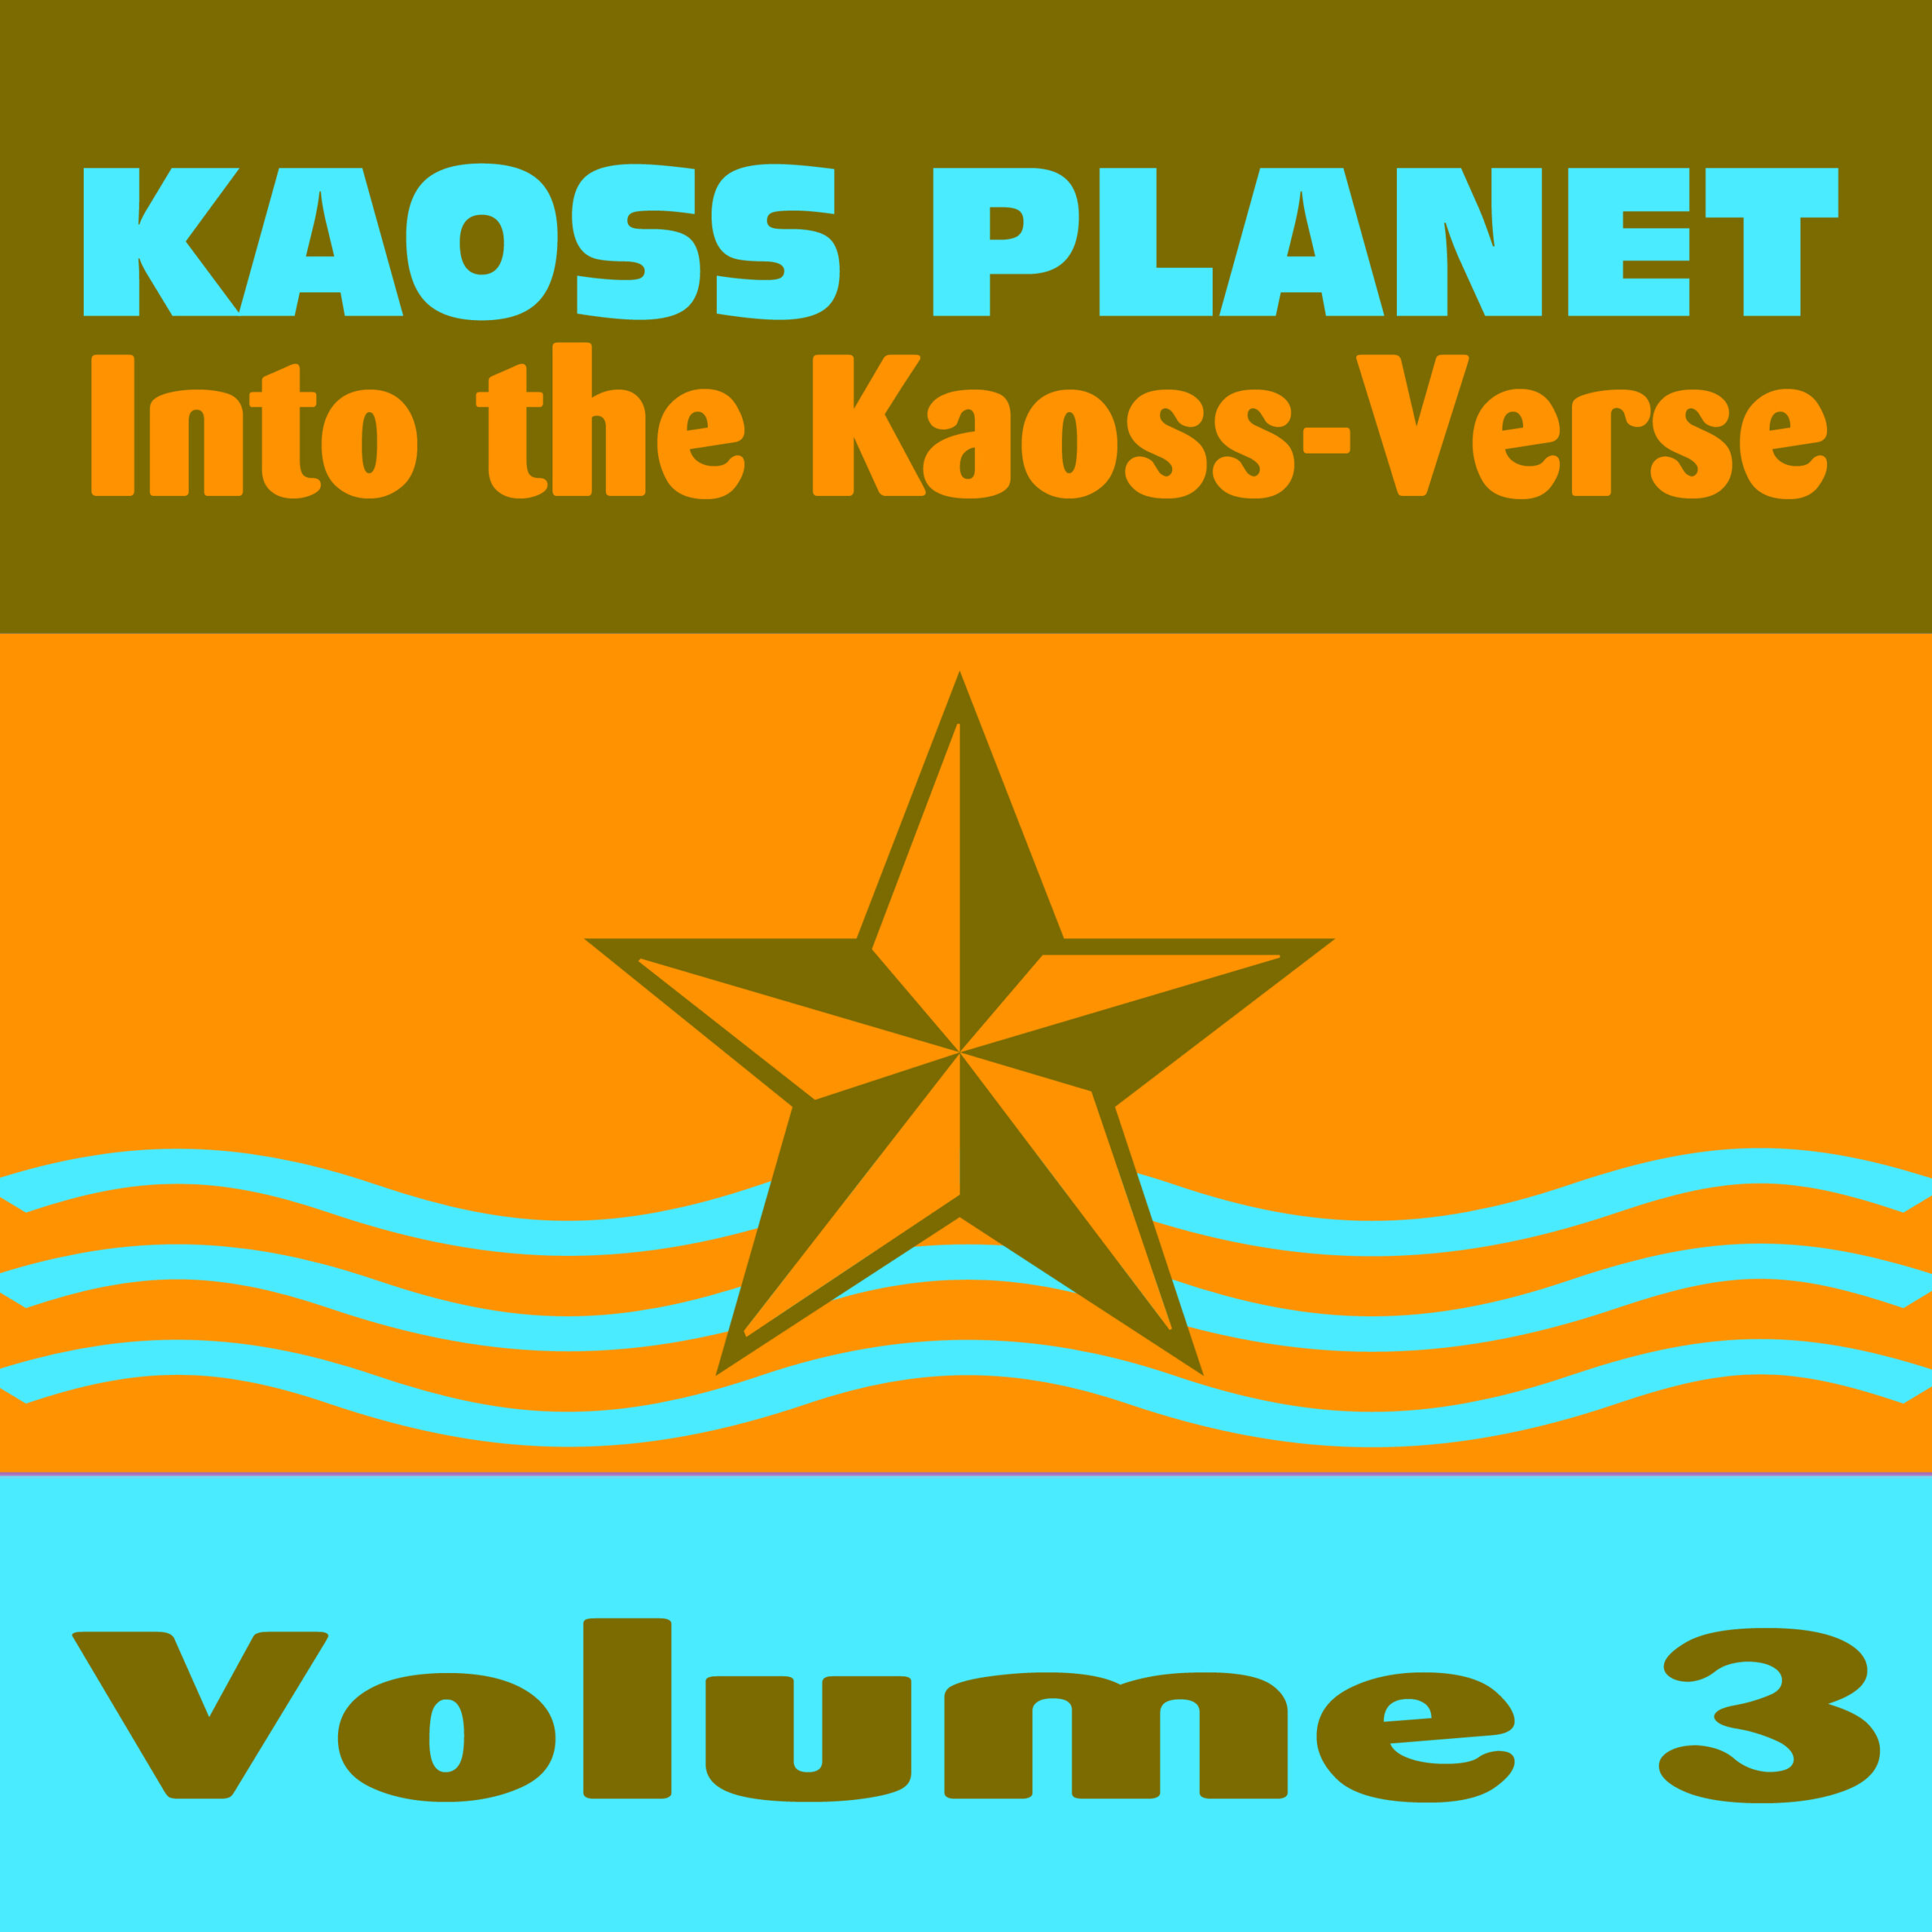 Kaoss Planet releases album: Into the Kaoss-Verse Vol 3